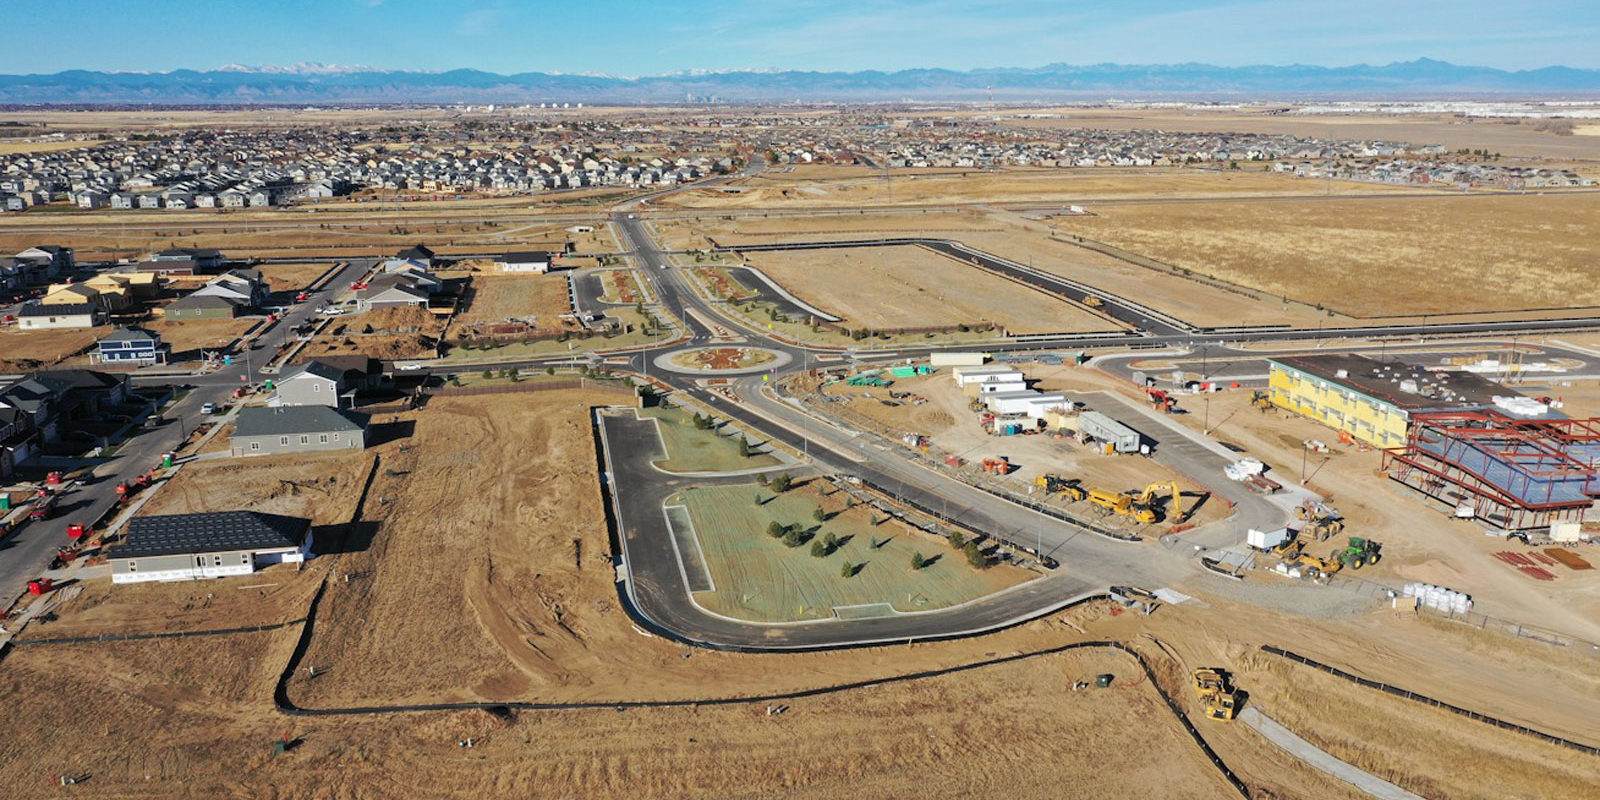 Aerial View Of Harmony Residential Development, Over Excavation Progress